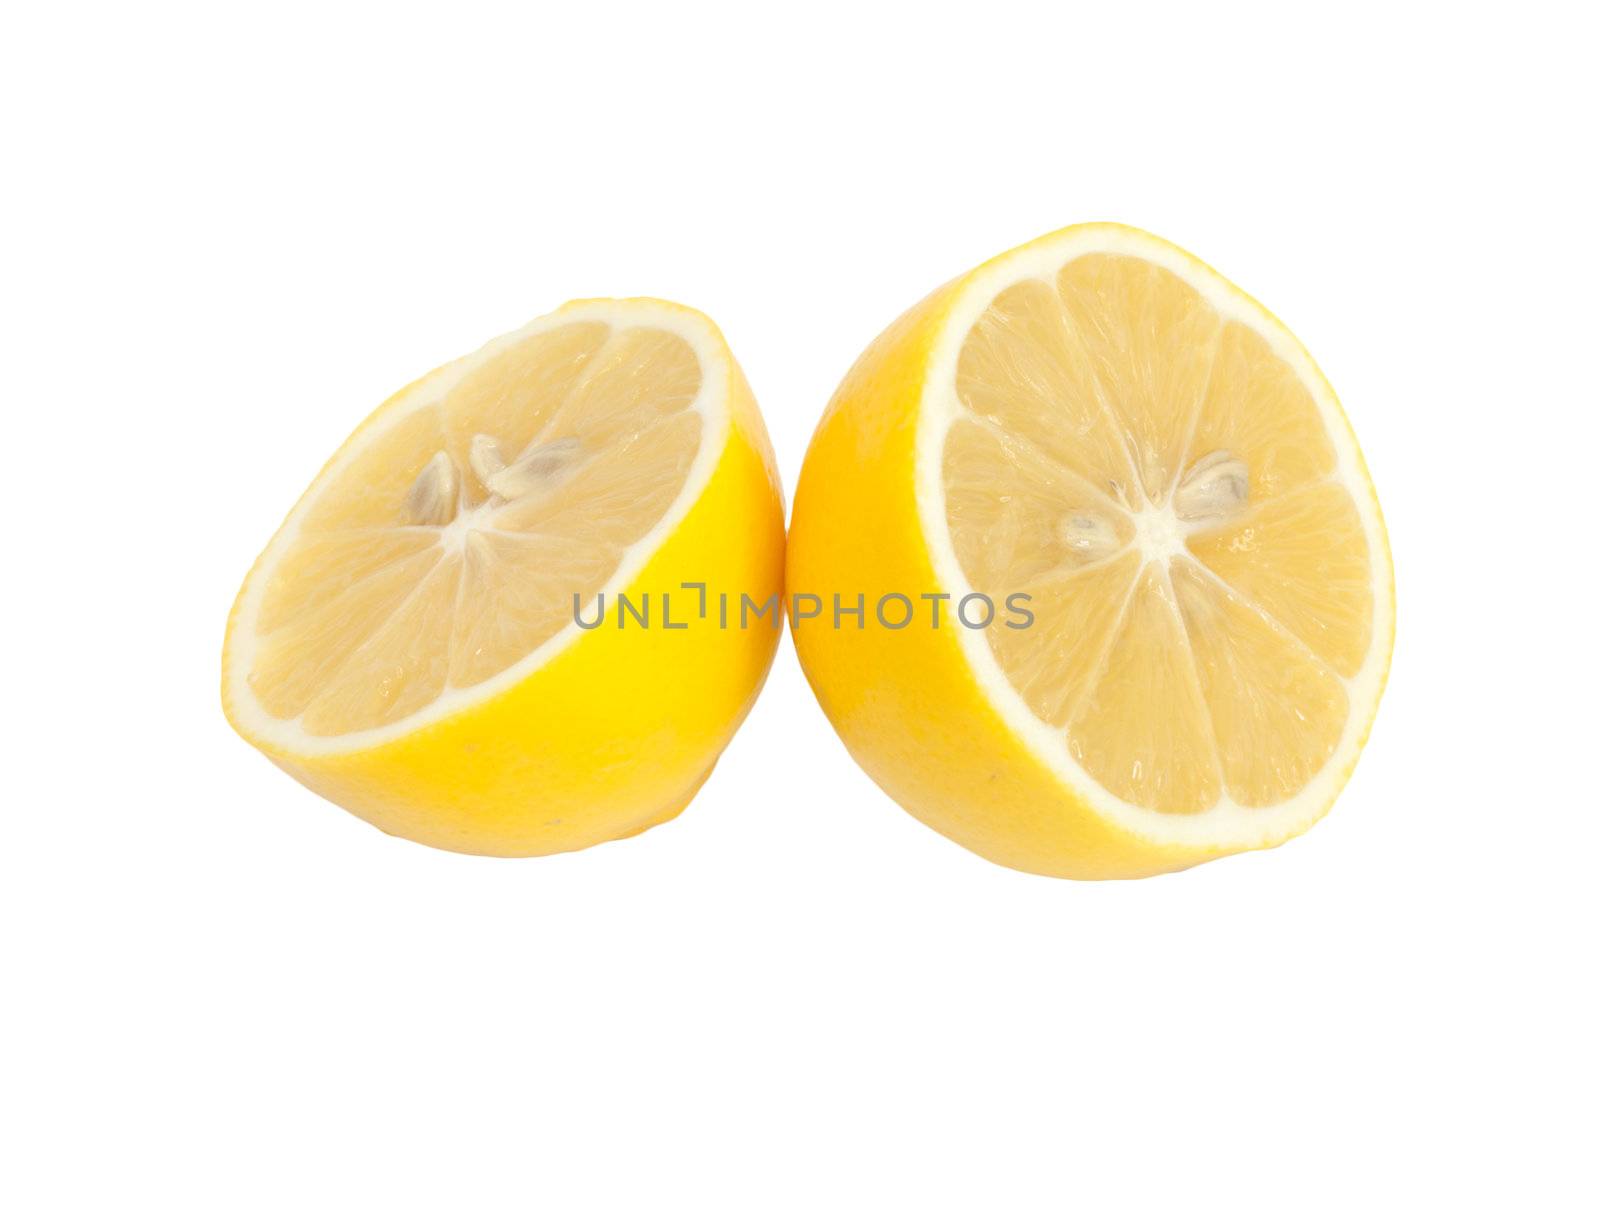 Two fresh lemon halves on white background. 